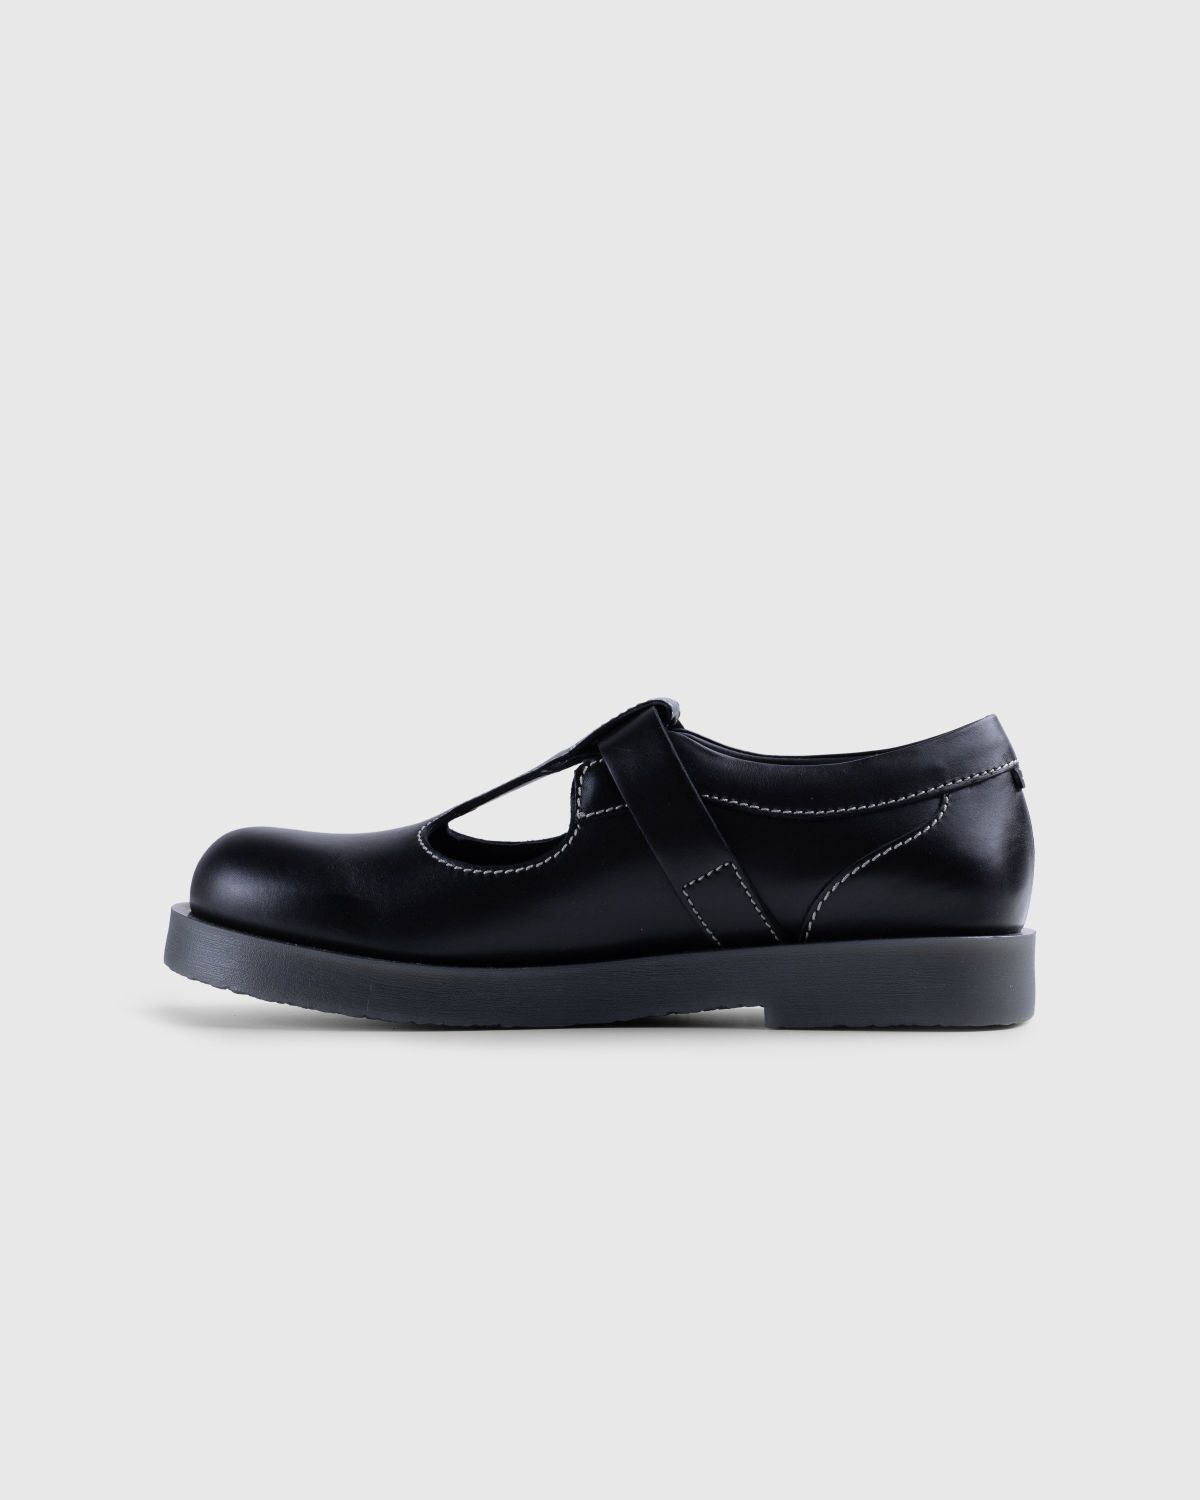 Acne Studios – Berylab Leather Buckle Shoes Black - Shoes - Black - Image 2